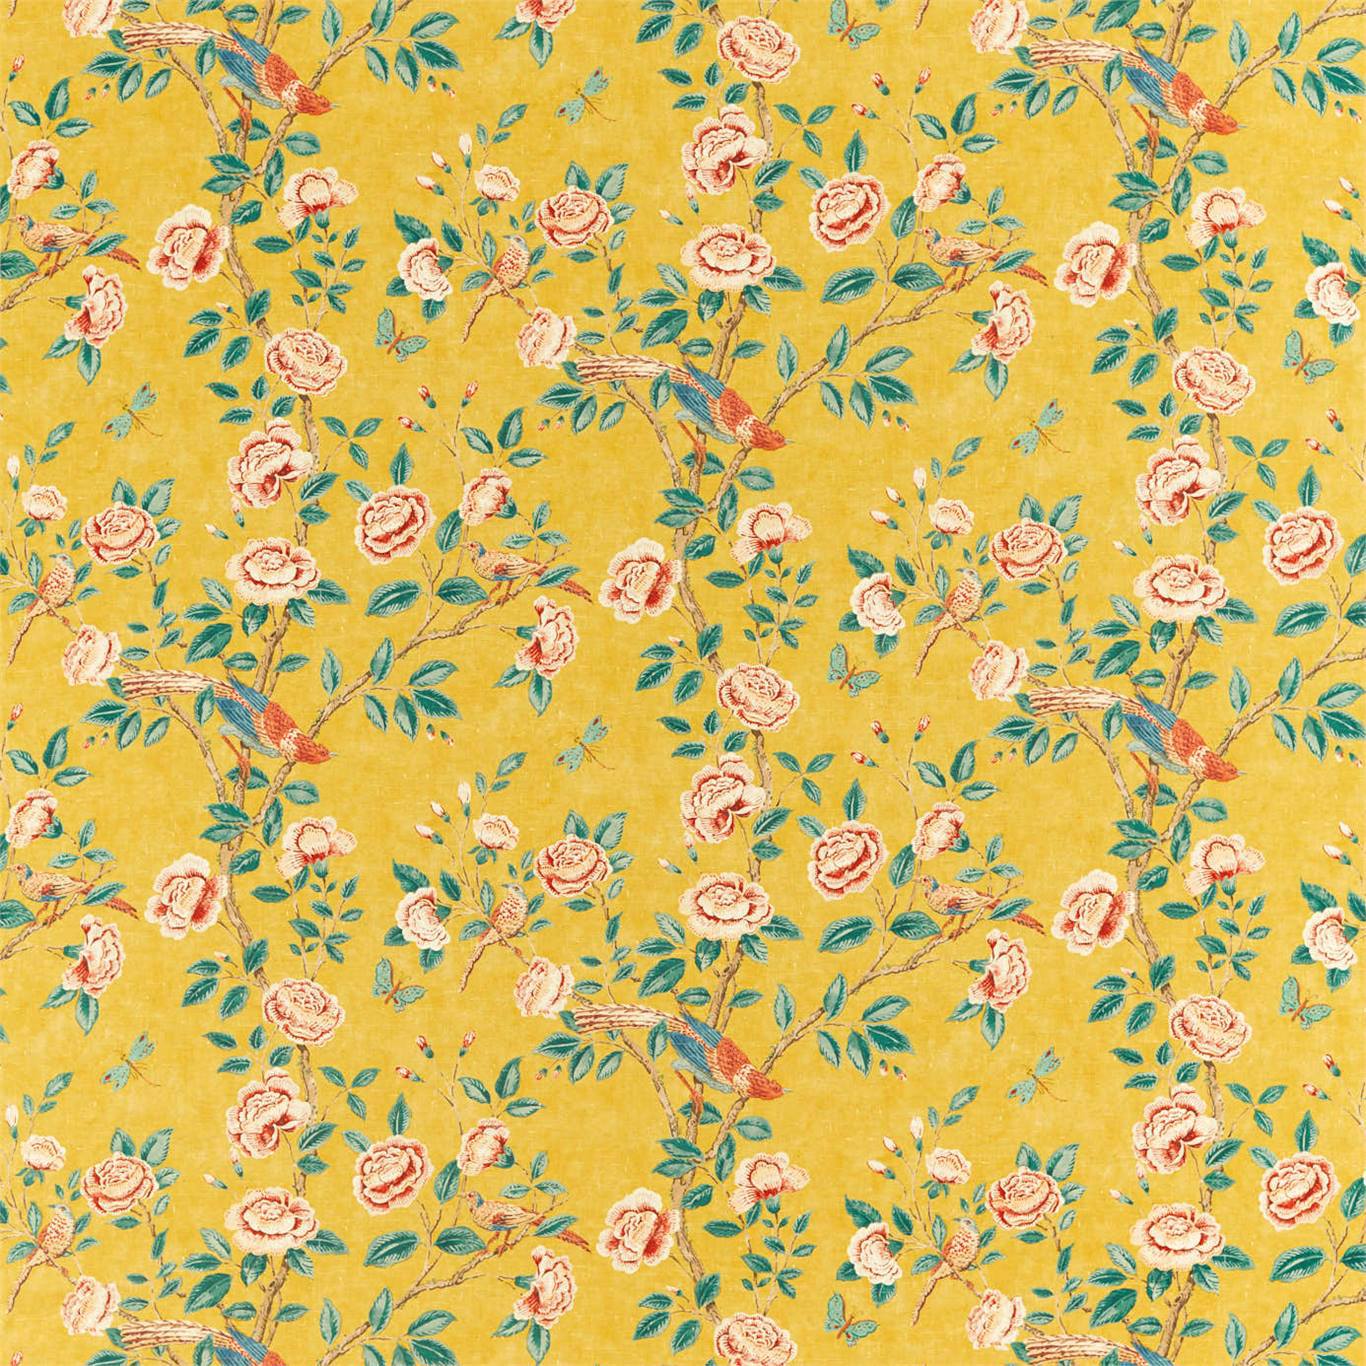 Andhara Fabric by Sanderson - DCEF226633 - Saffron/Teal